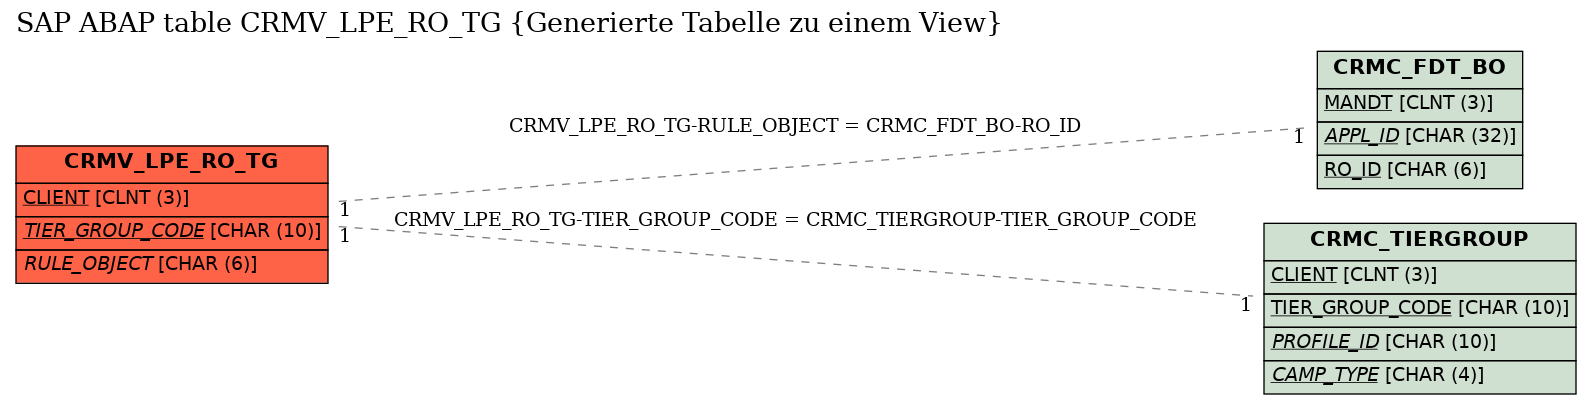 E-R Diagram for table CRMV_LPE_RO_TG (Generierte Tabelle zu einem View)